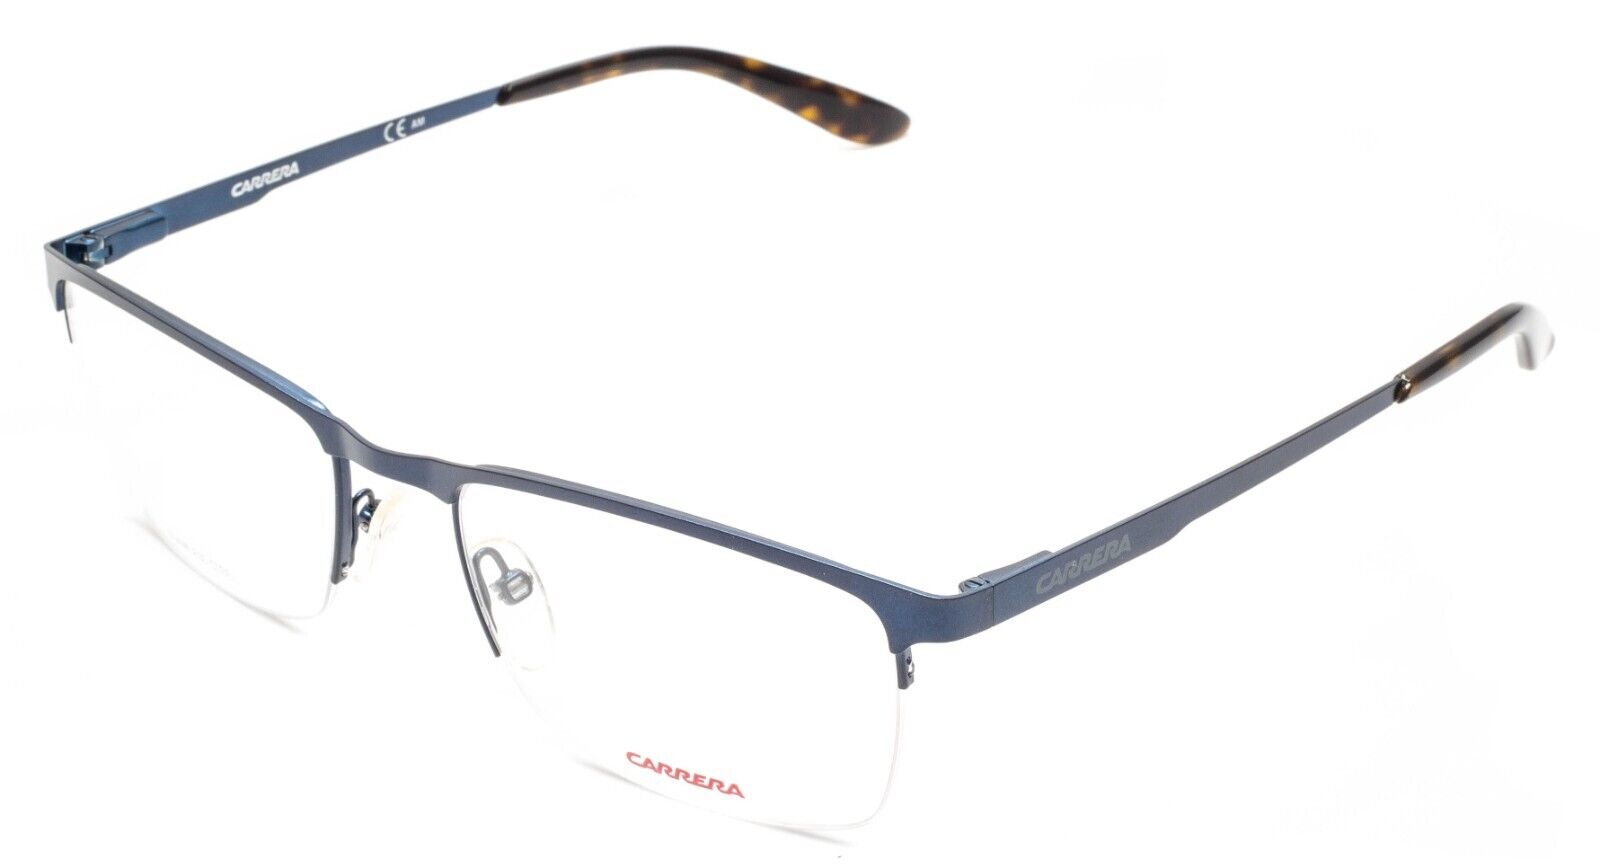 CARRERA CA 9913 UOQ 54mm Eyewear FRAMES Glasses RX Optical Eyeglasses New  Italy - GGV Eyewear